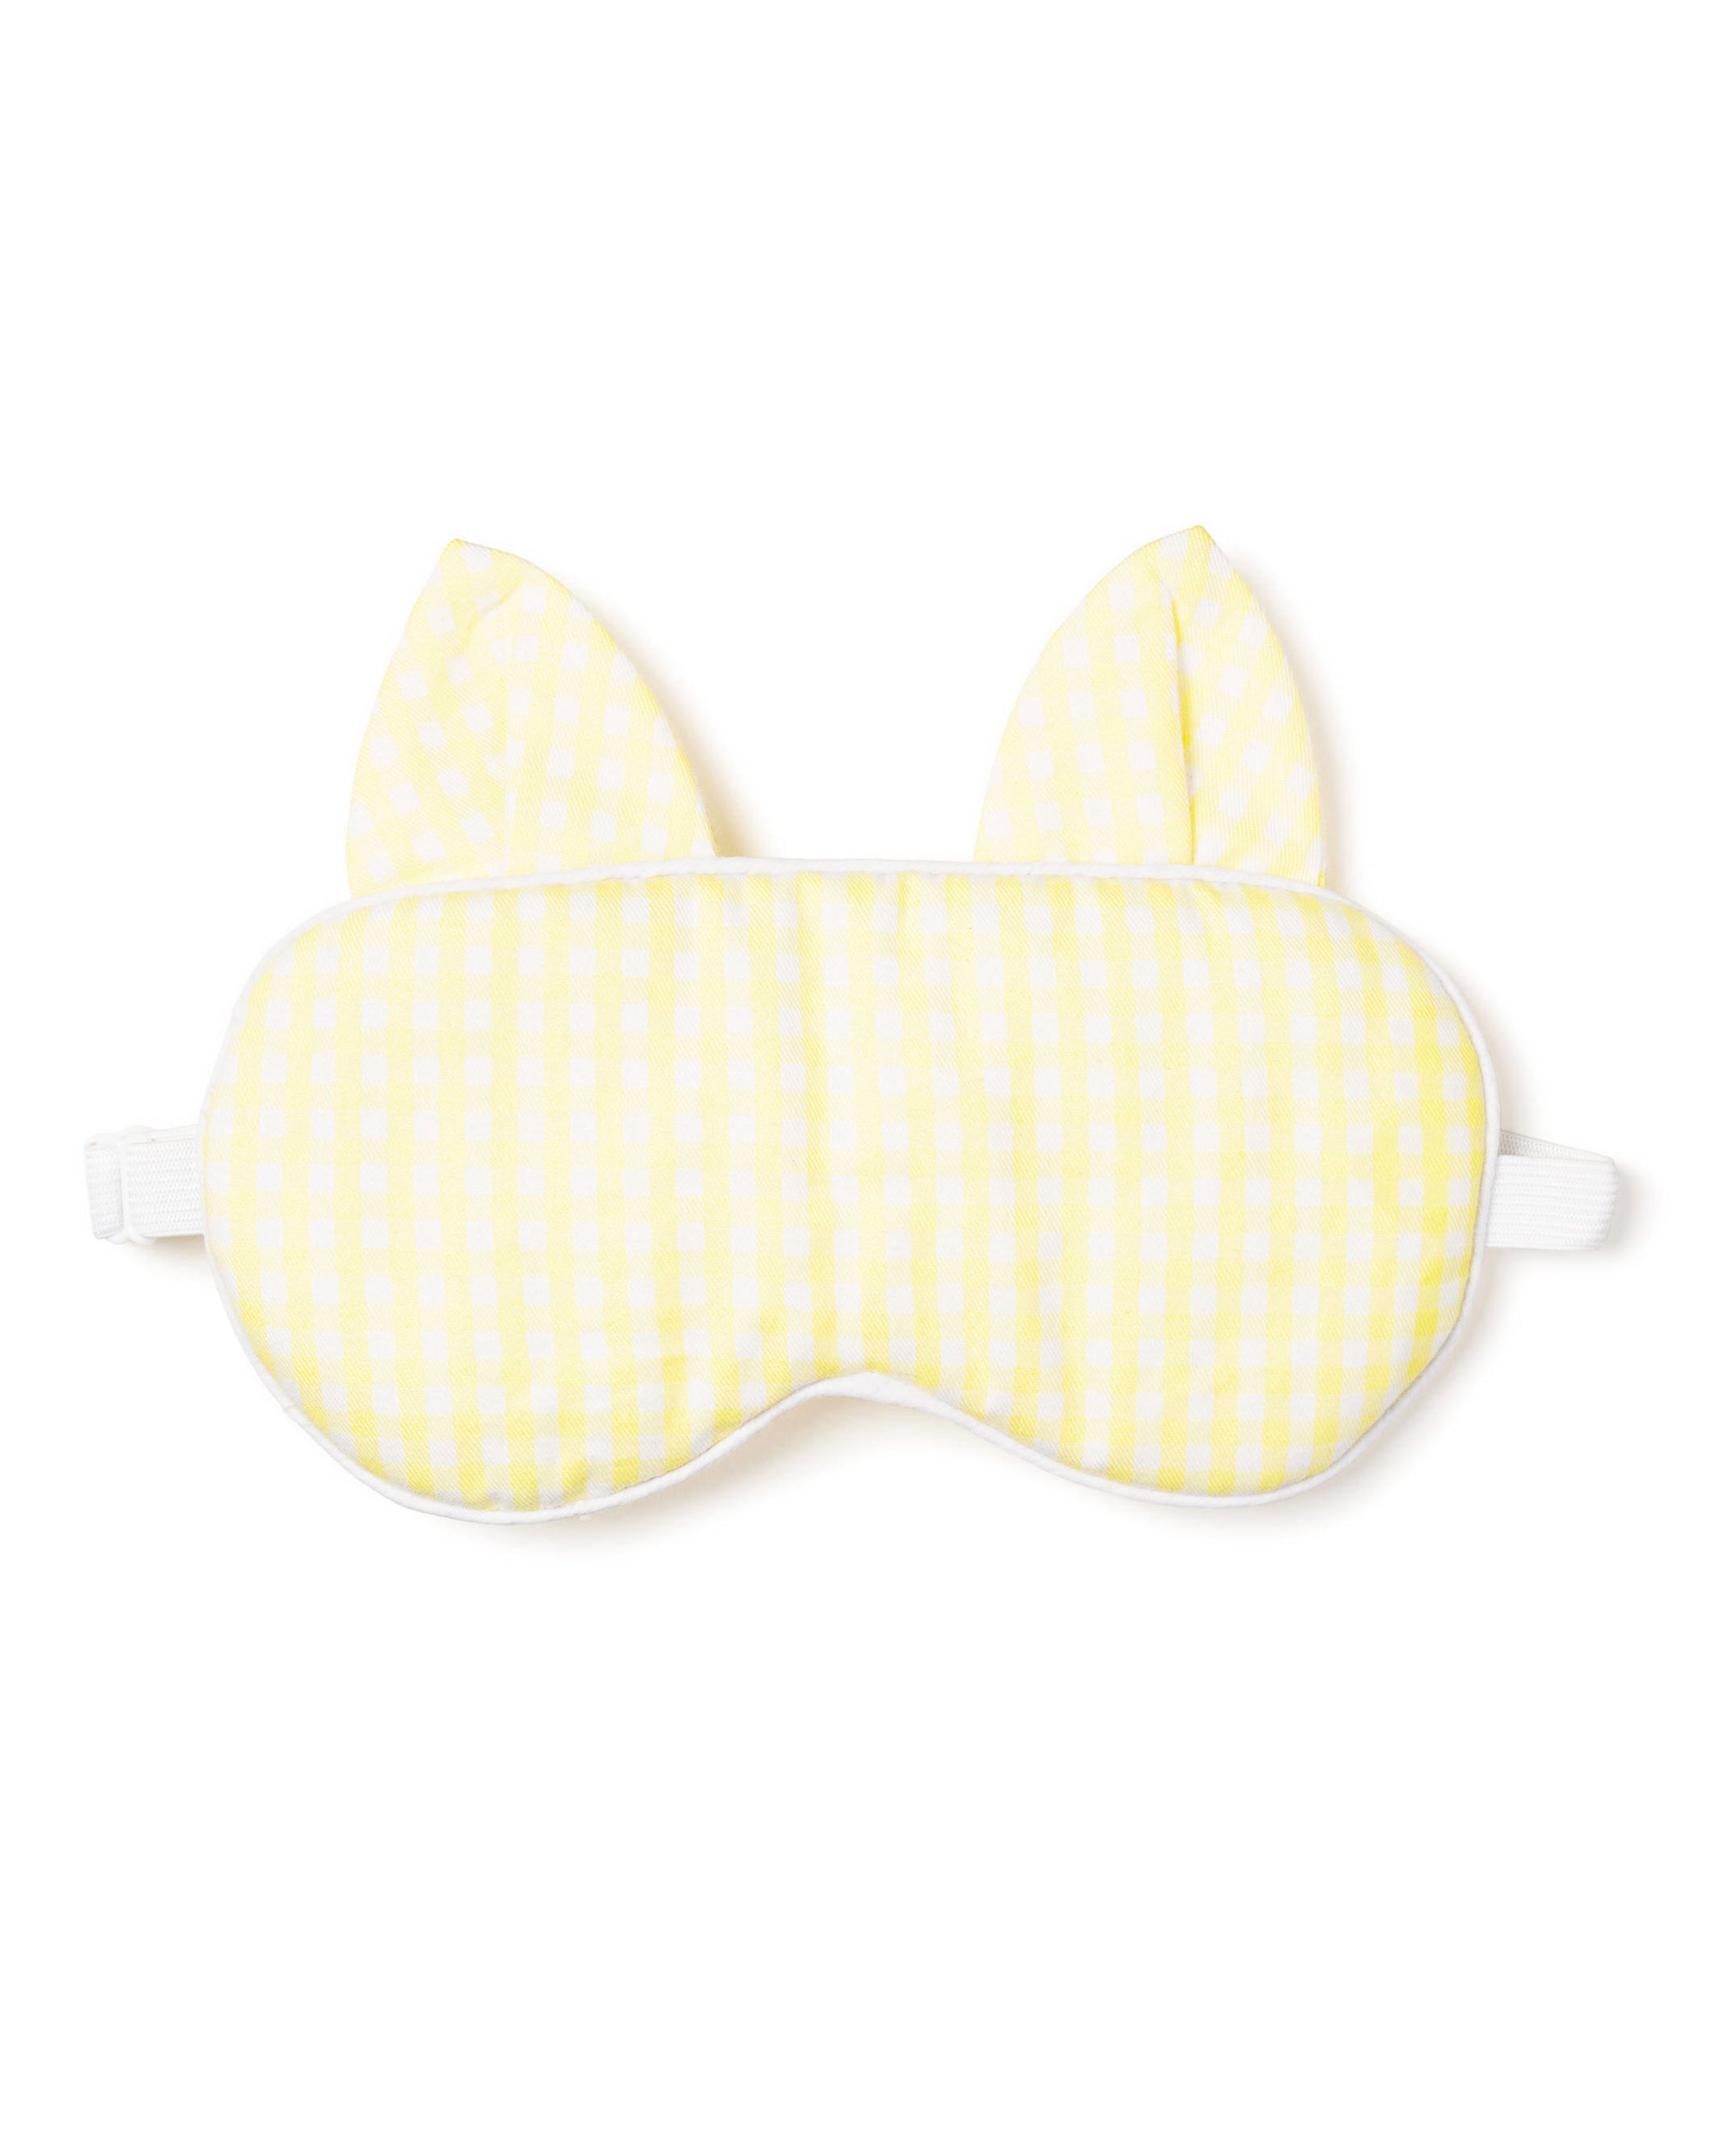 Adult's Kitty Sleep Mask in Yellow Gingham